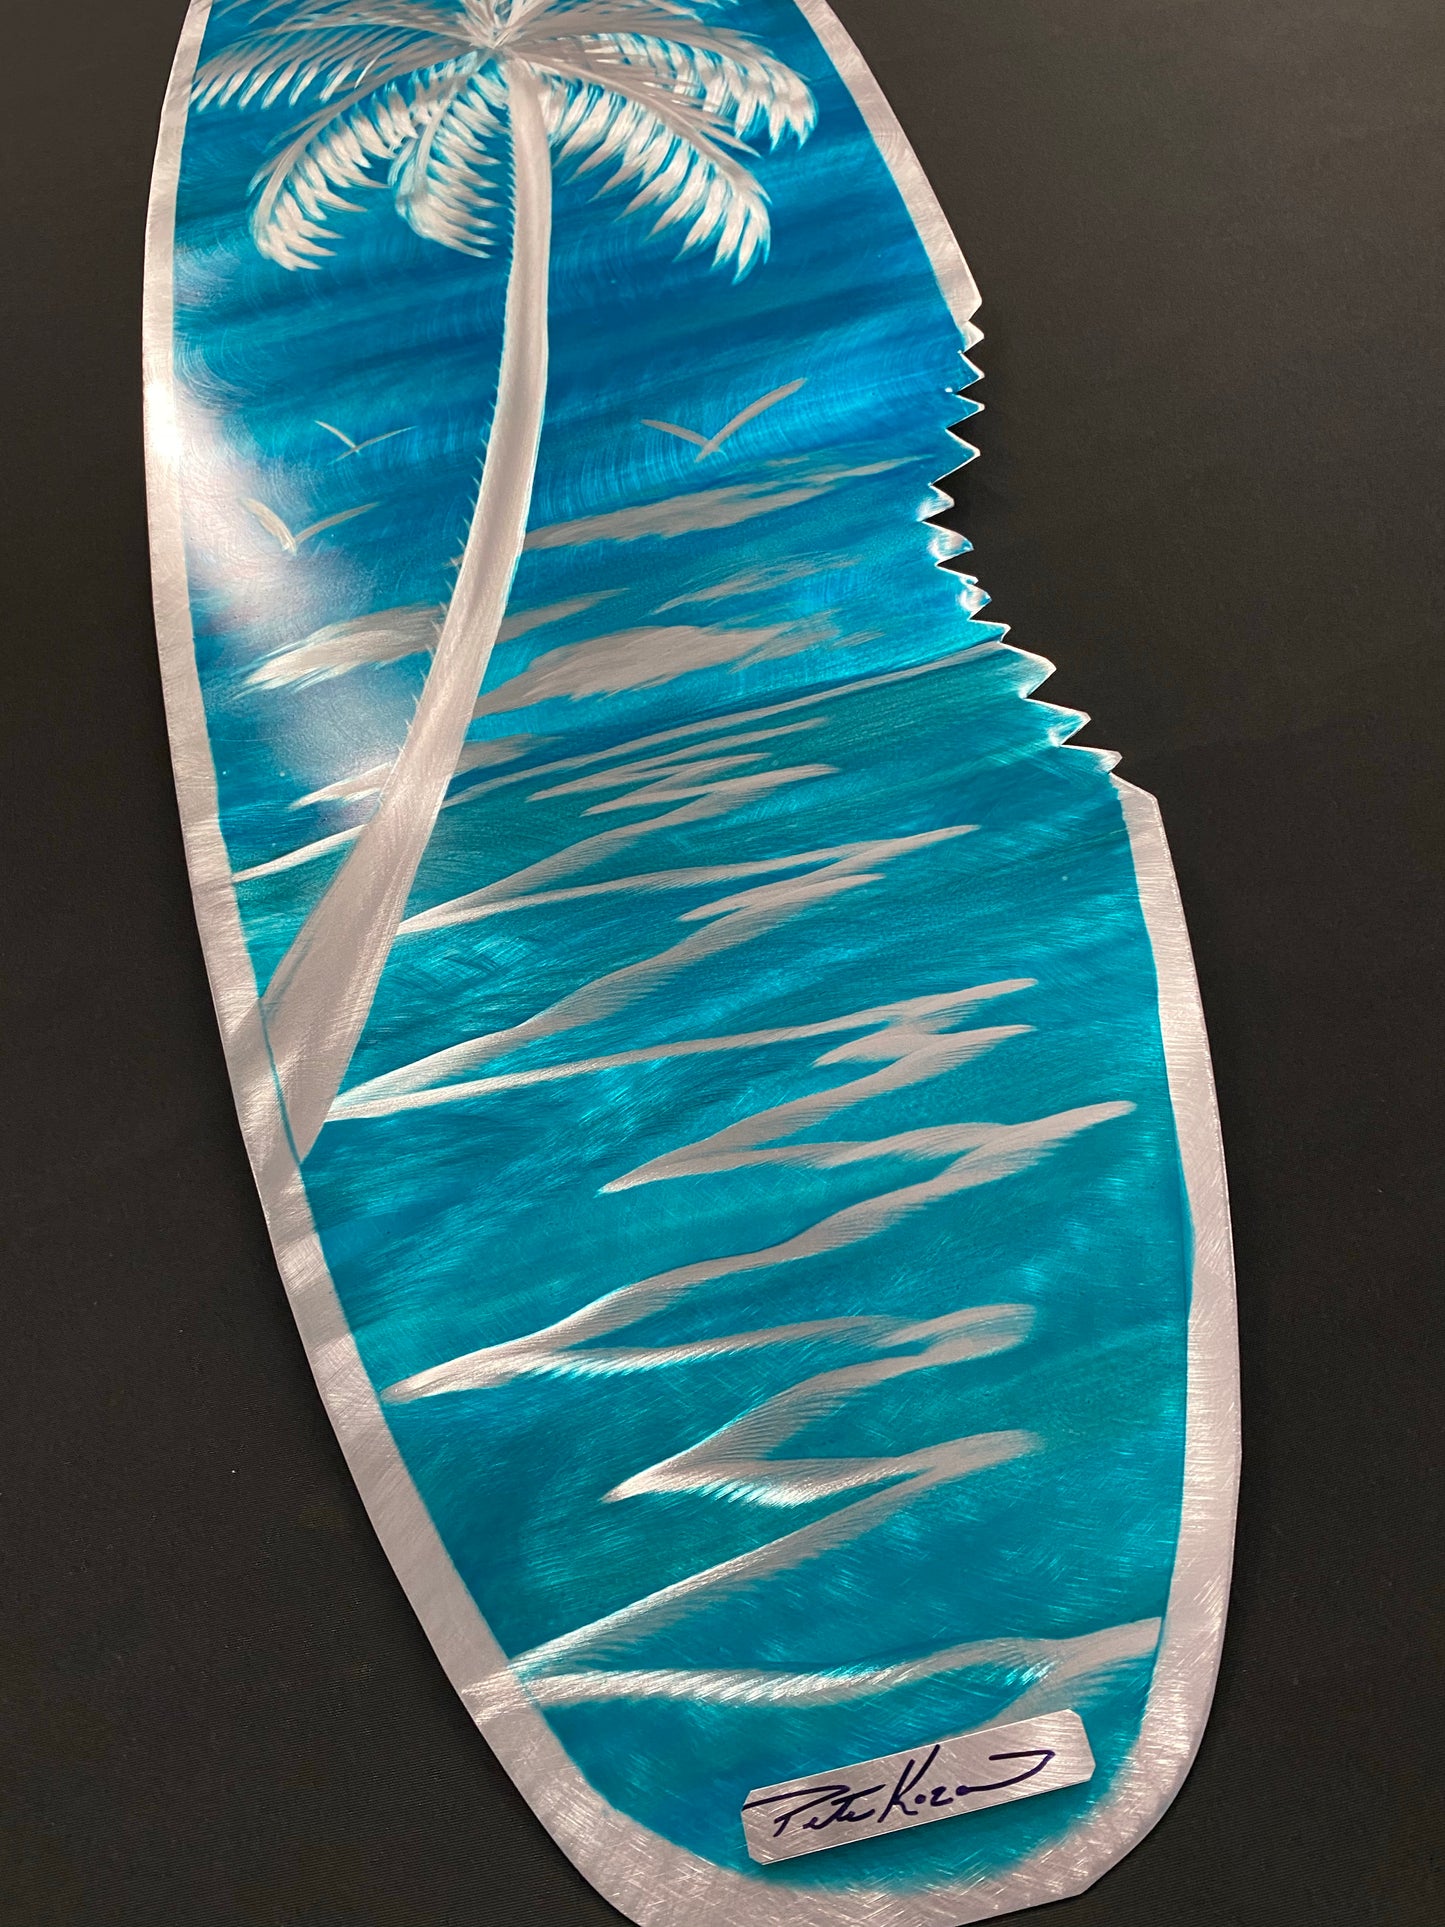 Sharkbite Blue Wave Palm Surfboard PETE KOZA METAL ART